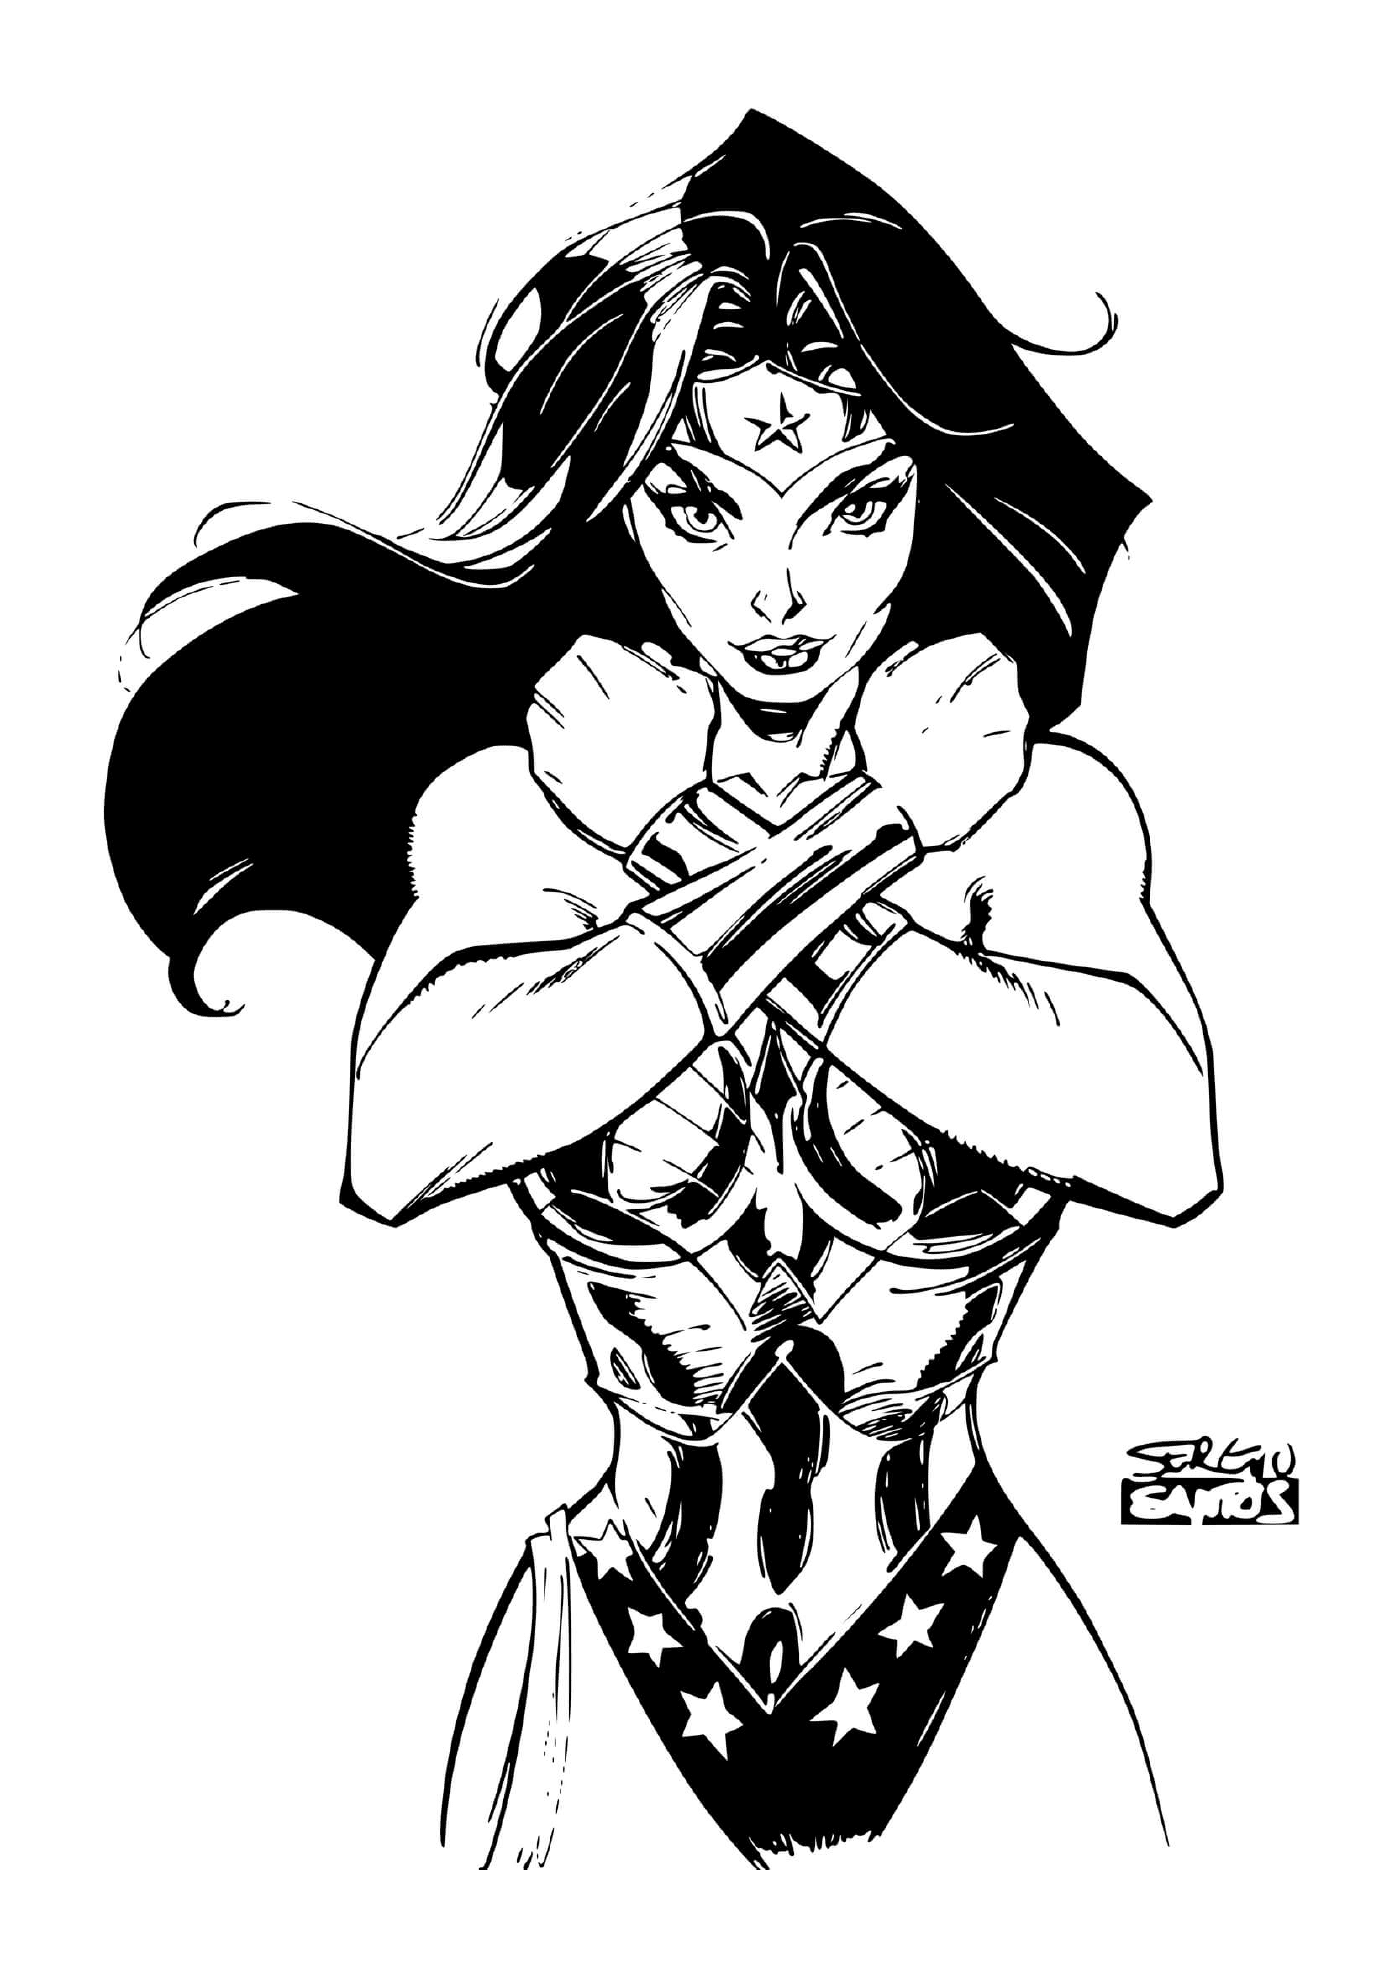  Wonder Woman por Sergioxantos 